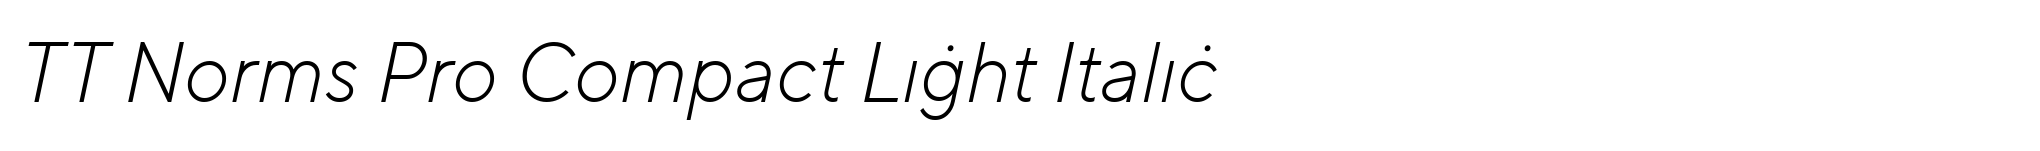 TT Norms Pro Compact Light Italic image